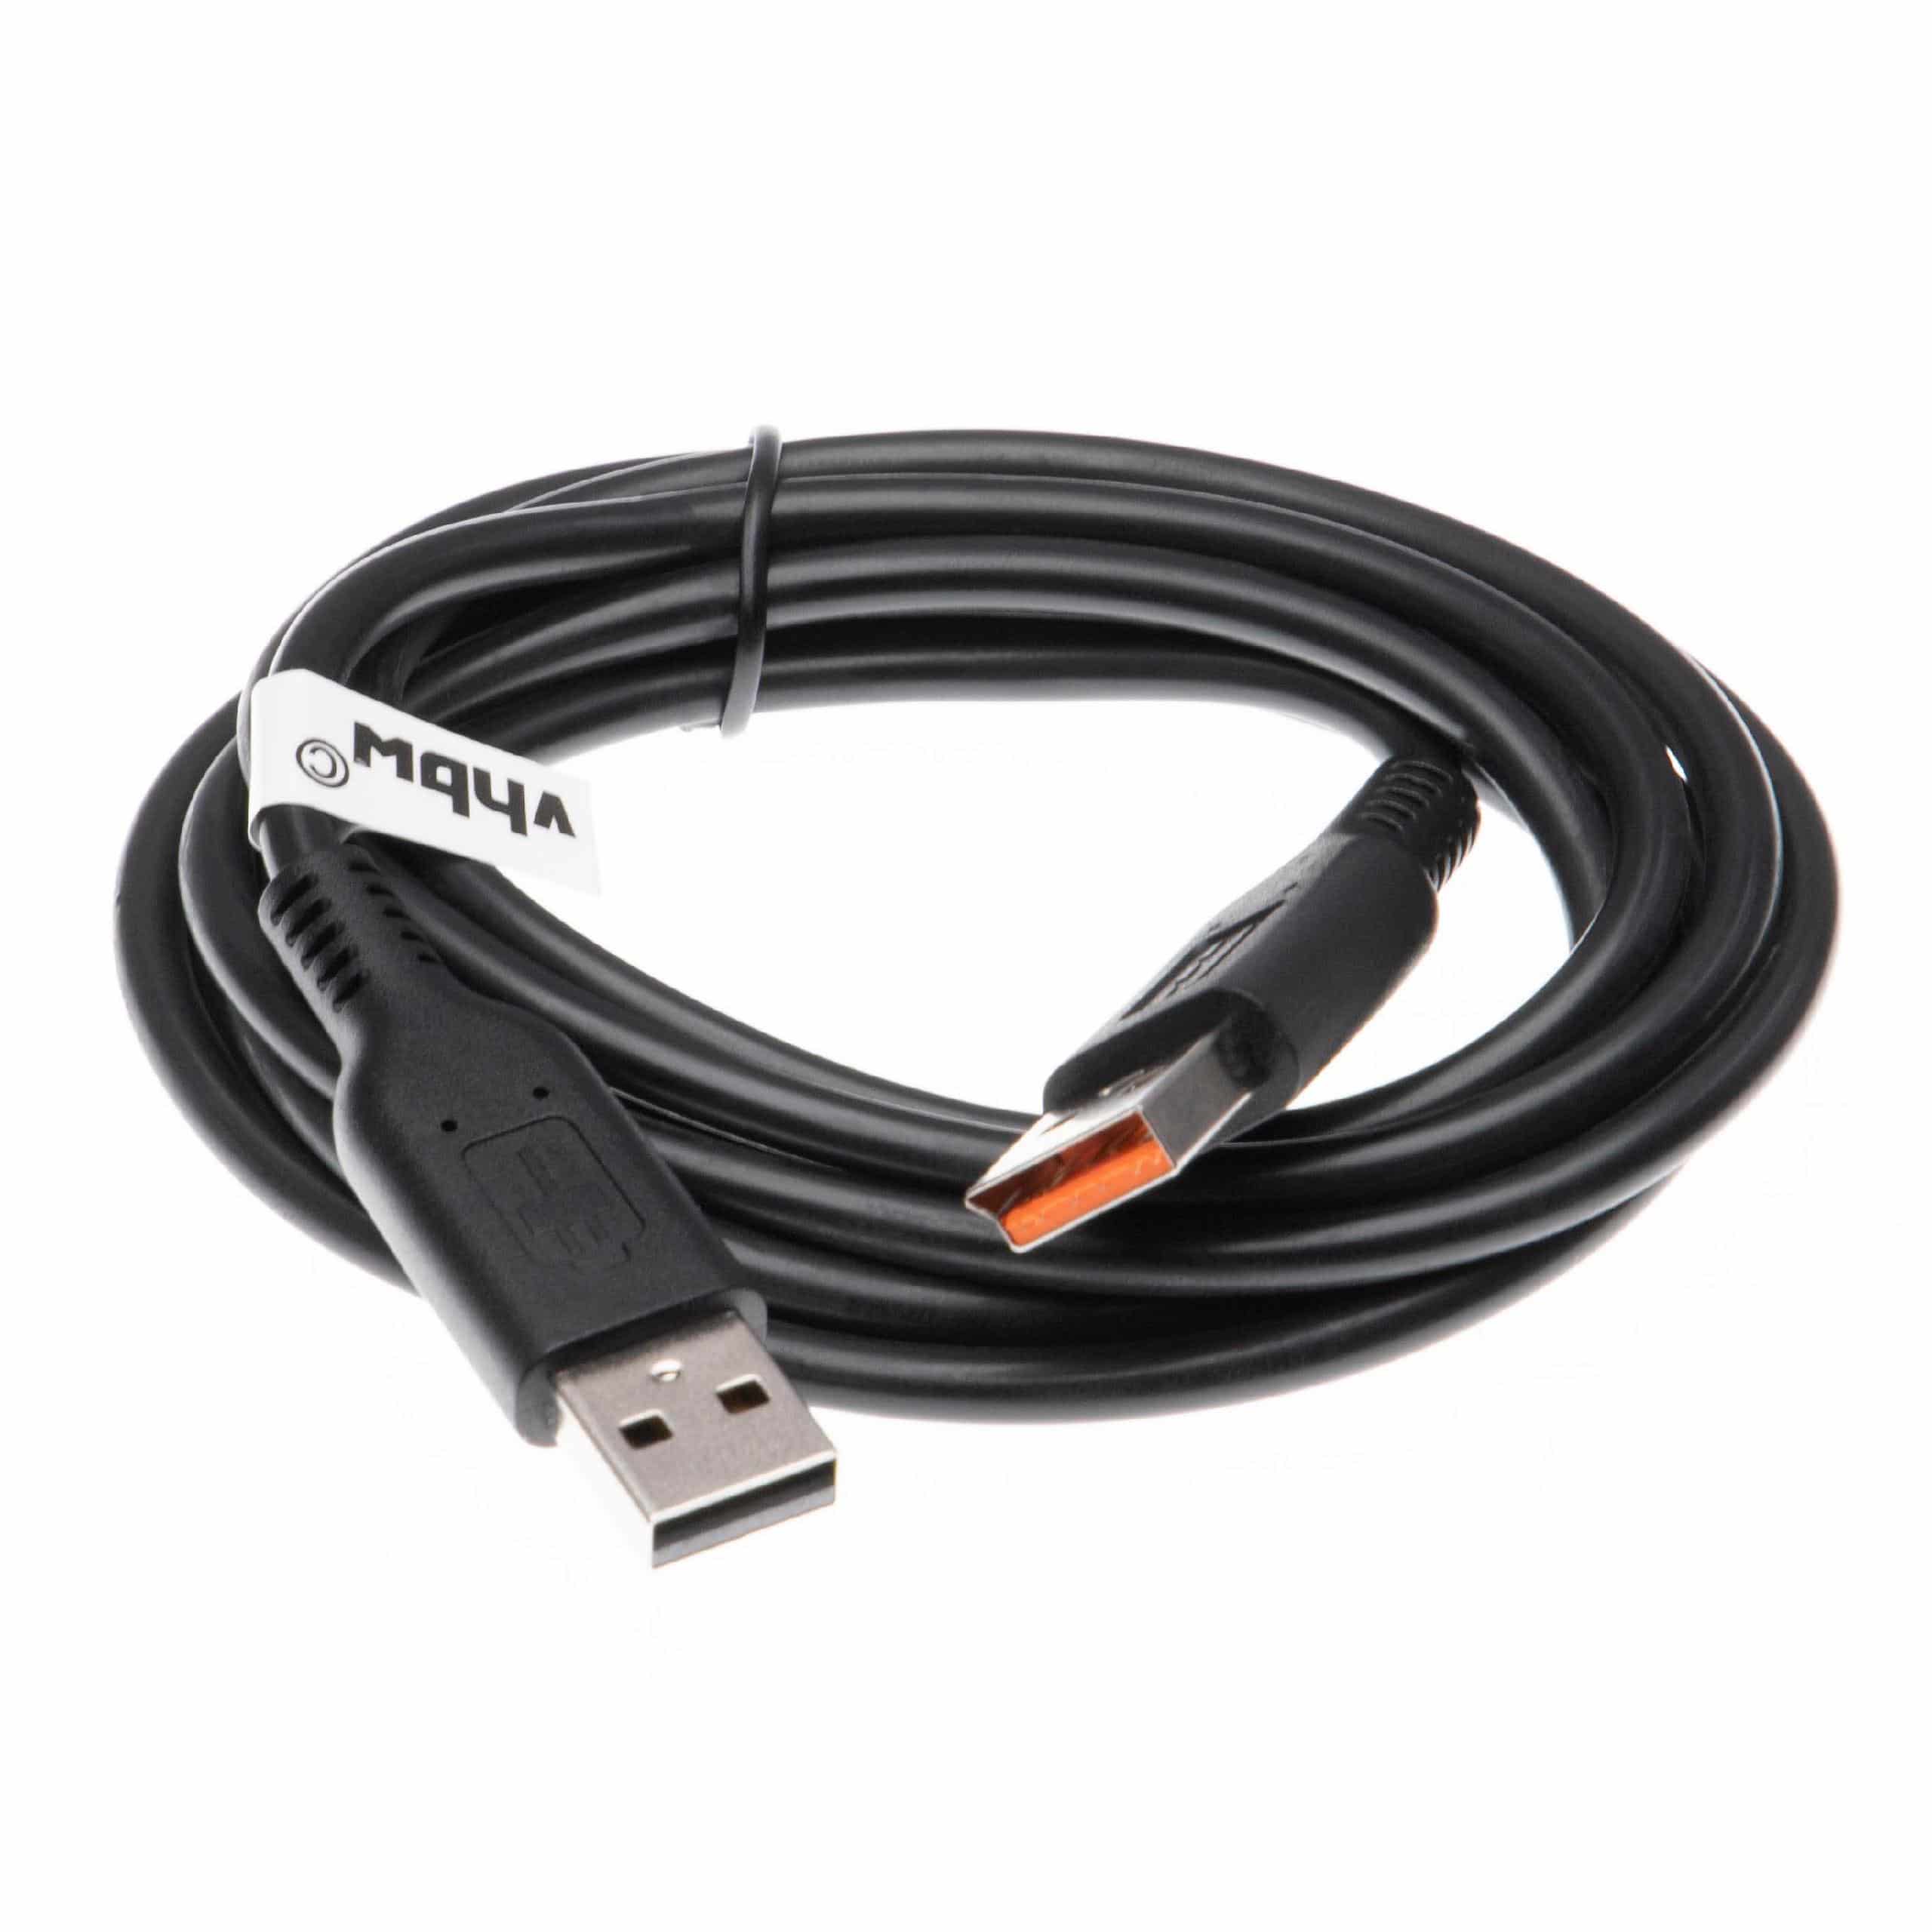 Cable de datos USB reemplaza Lenovo 5L60J33144, 5L60J33145 para tablet Lenovo - cable de carga 2en1, 200cm